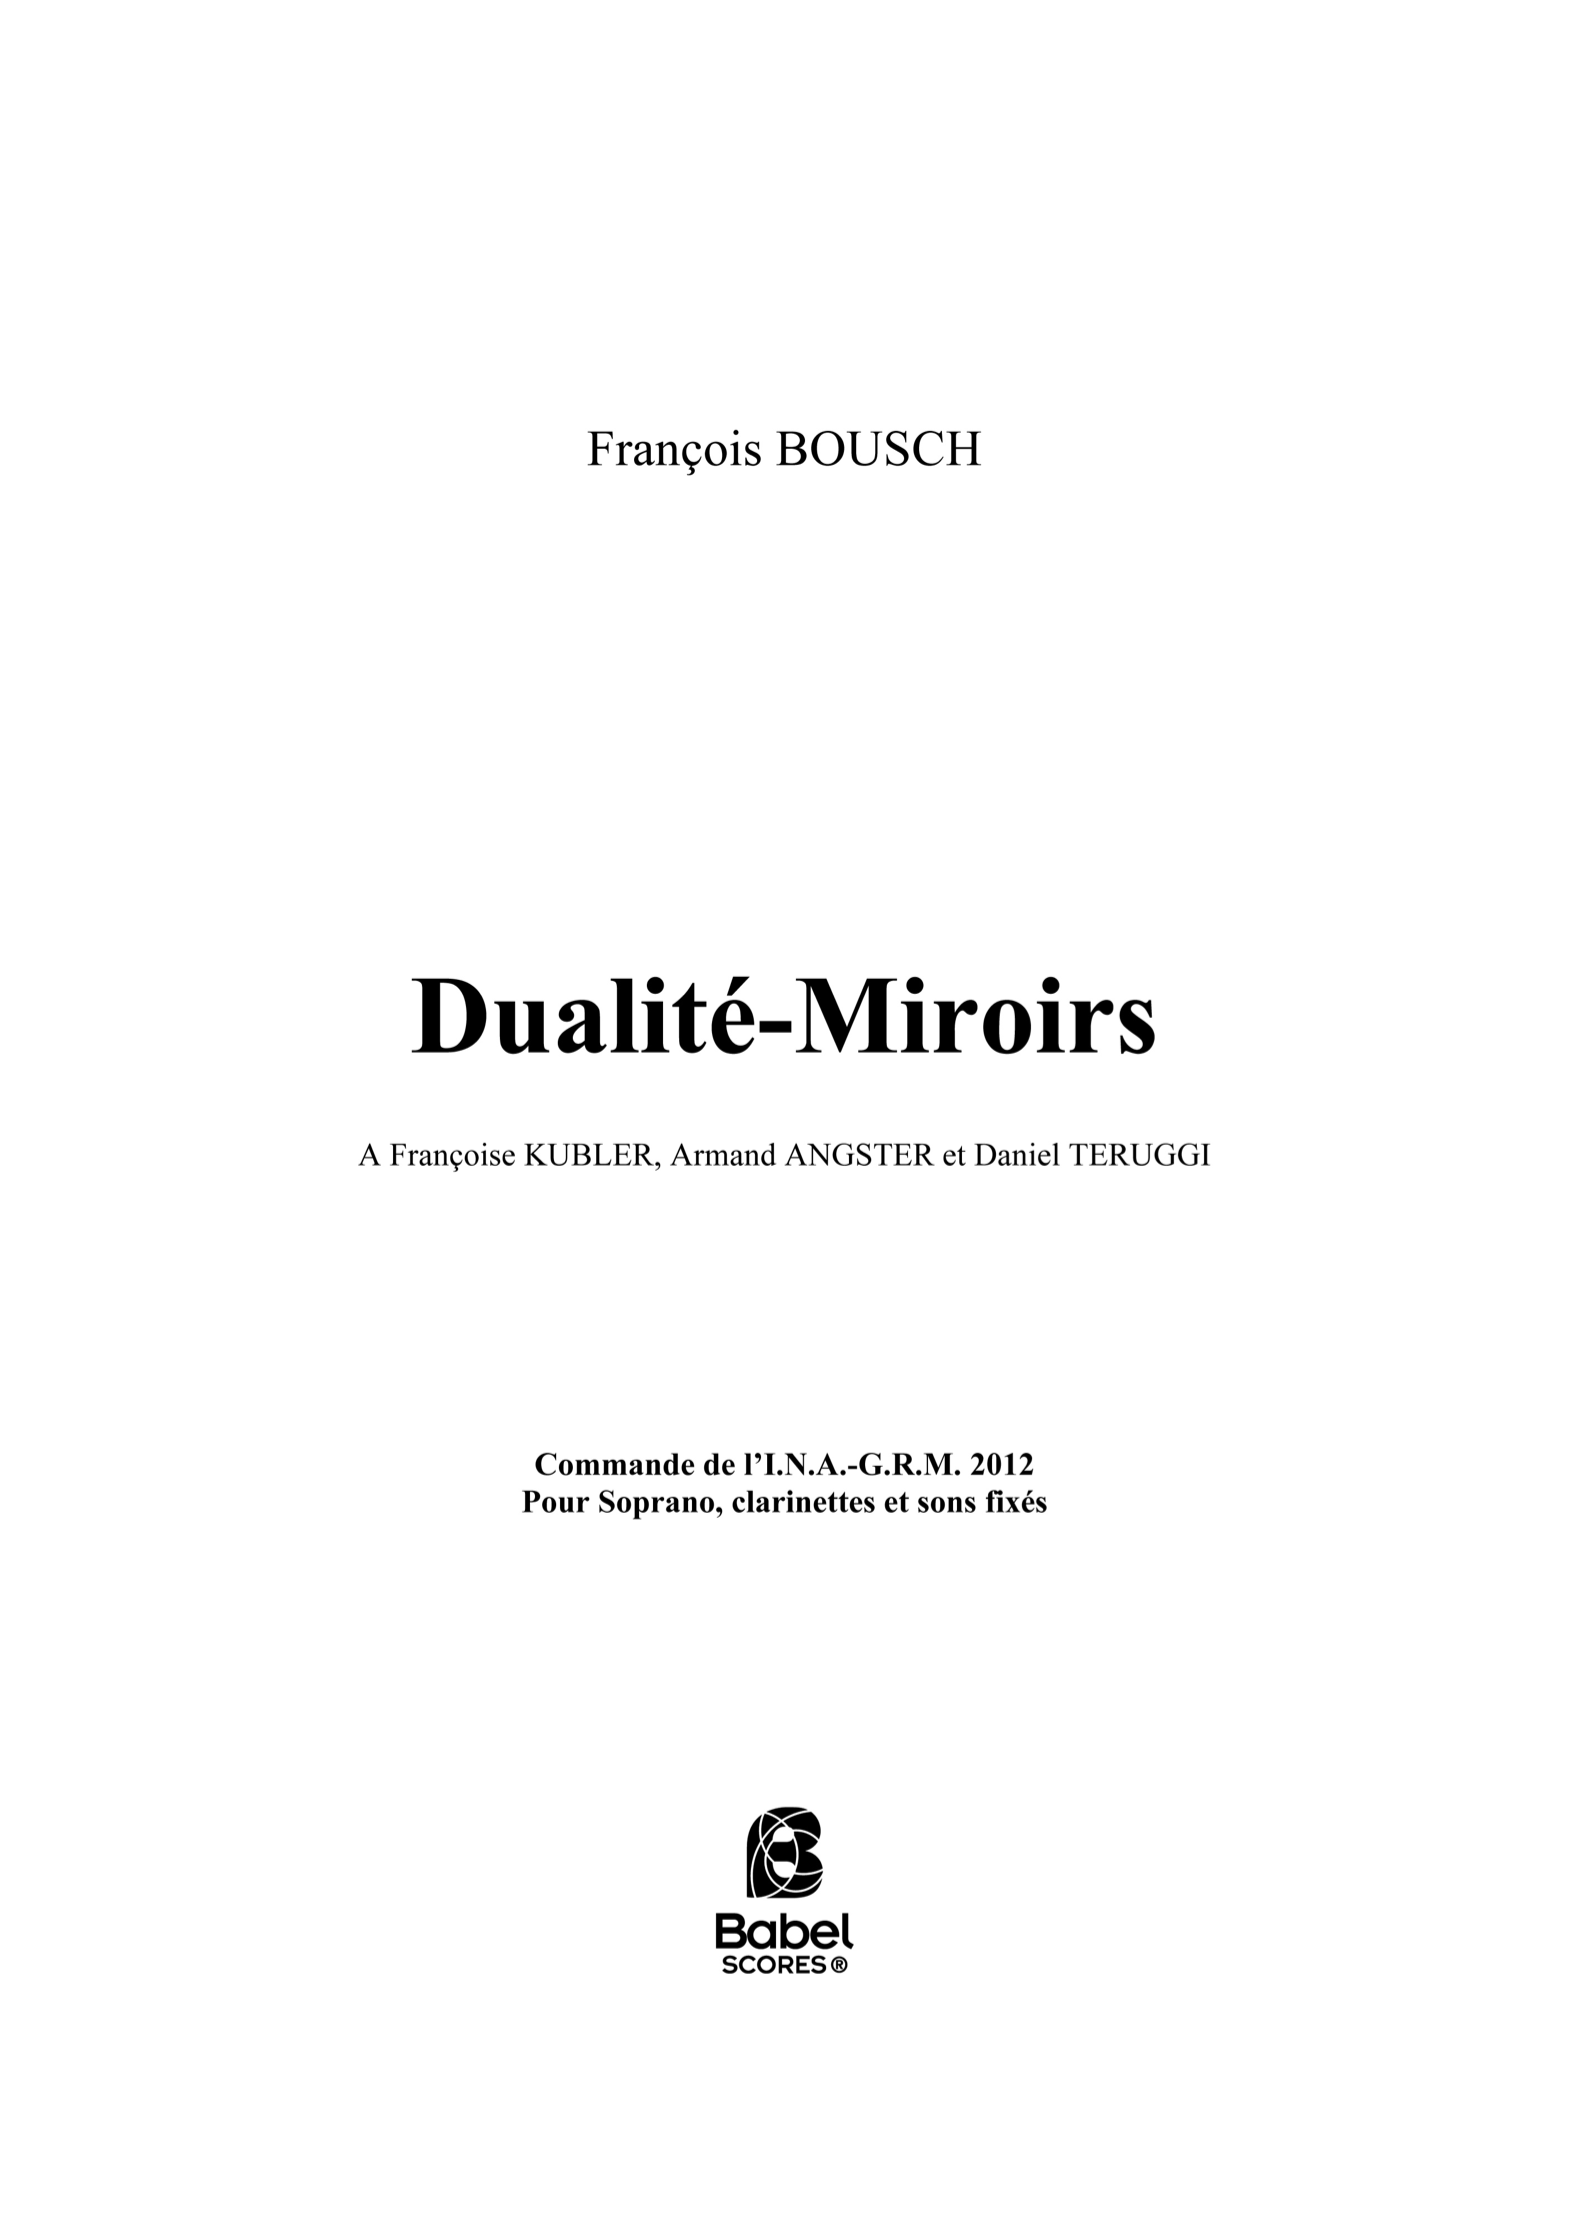 Dualite Miroirs F BOUSCH